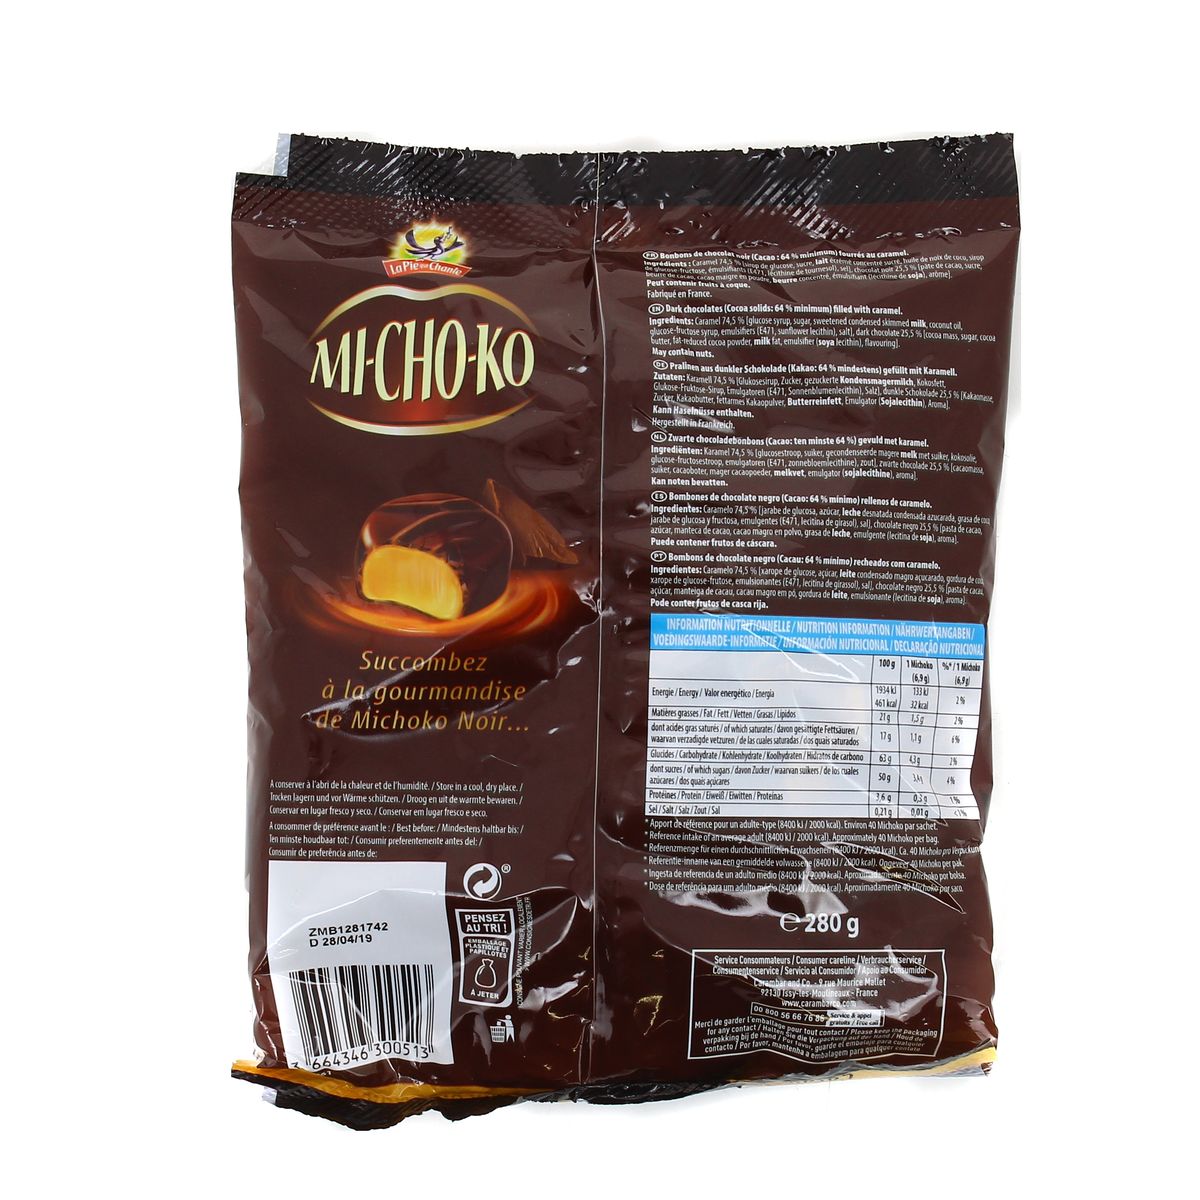 Bonbons caramel chocolat noir MICHOKO - Sachet de 100 g sur